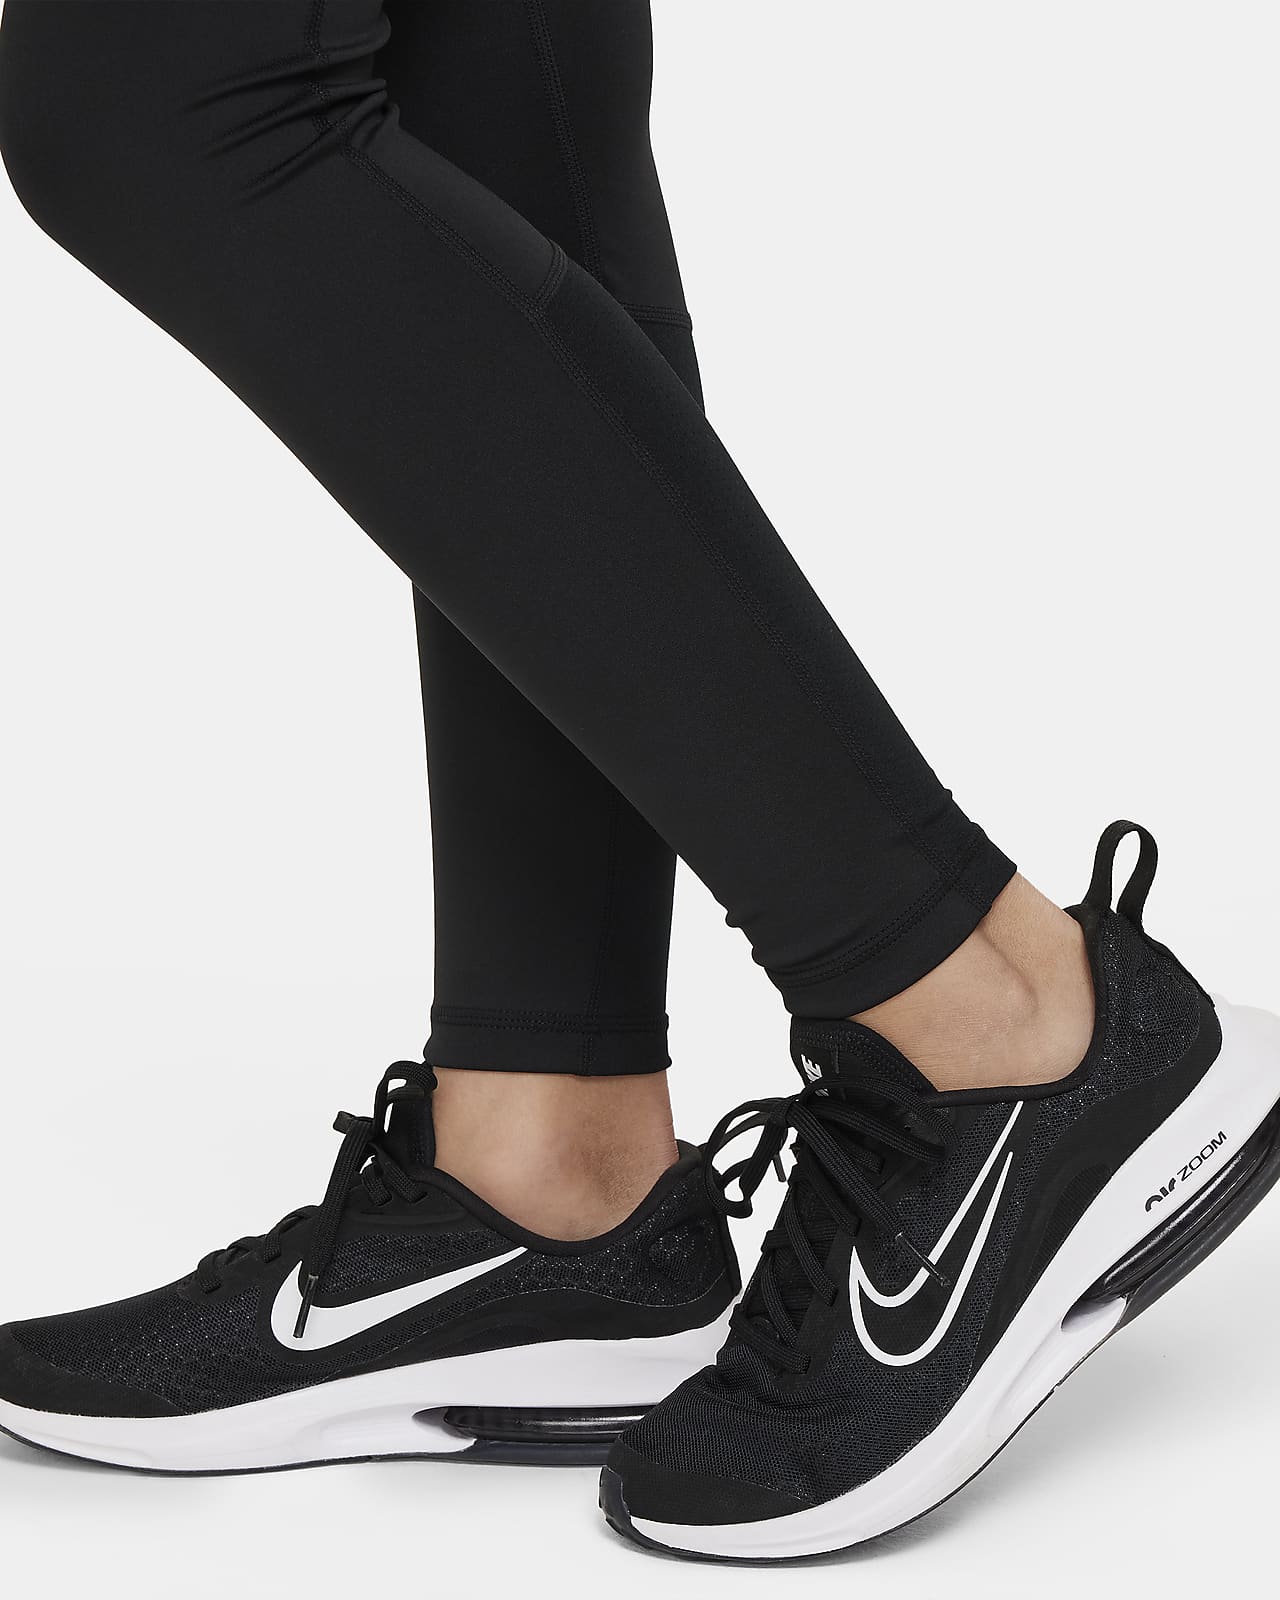 Nike Pro Womens Tights (Black-White), Nike, Sale